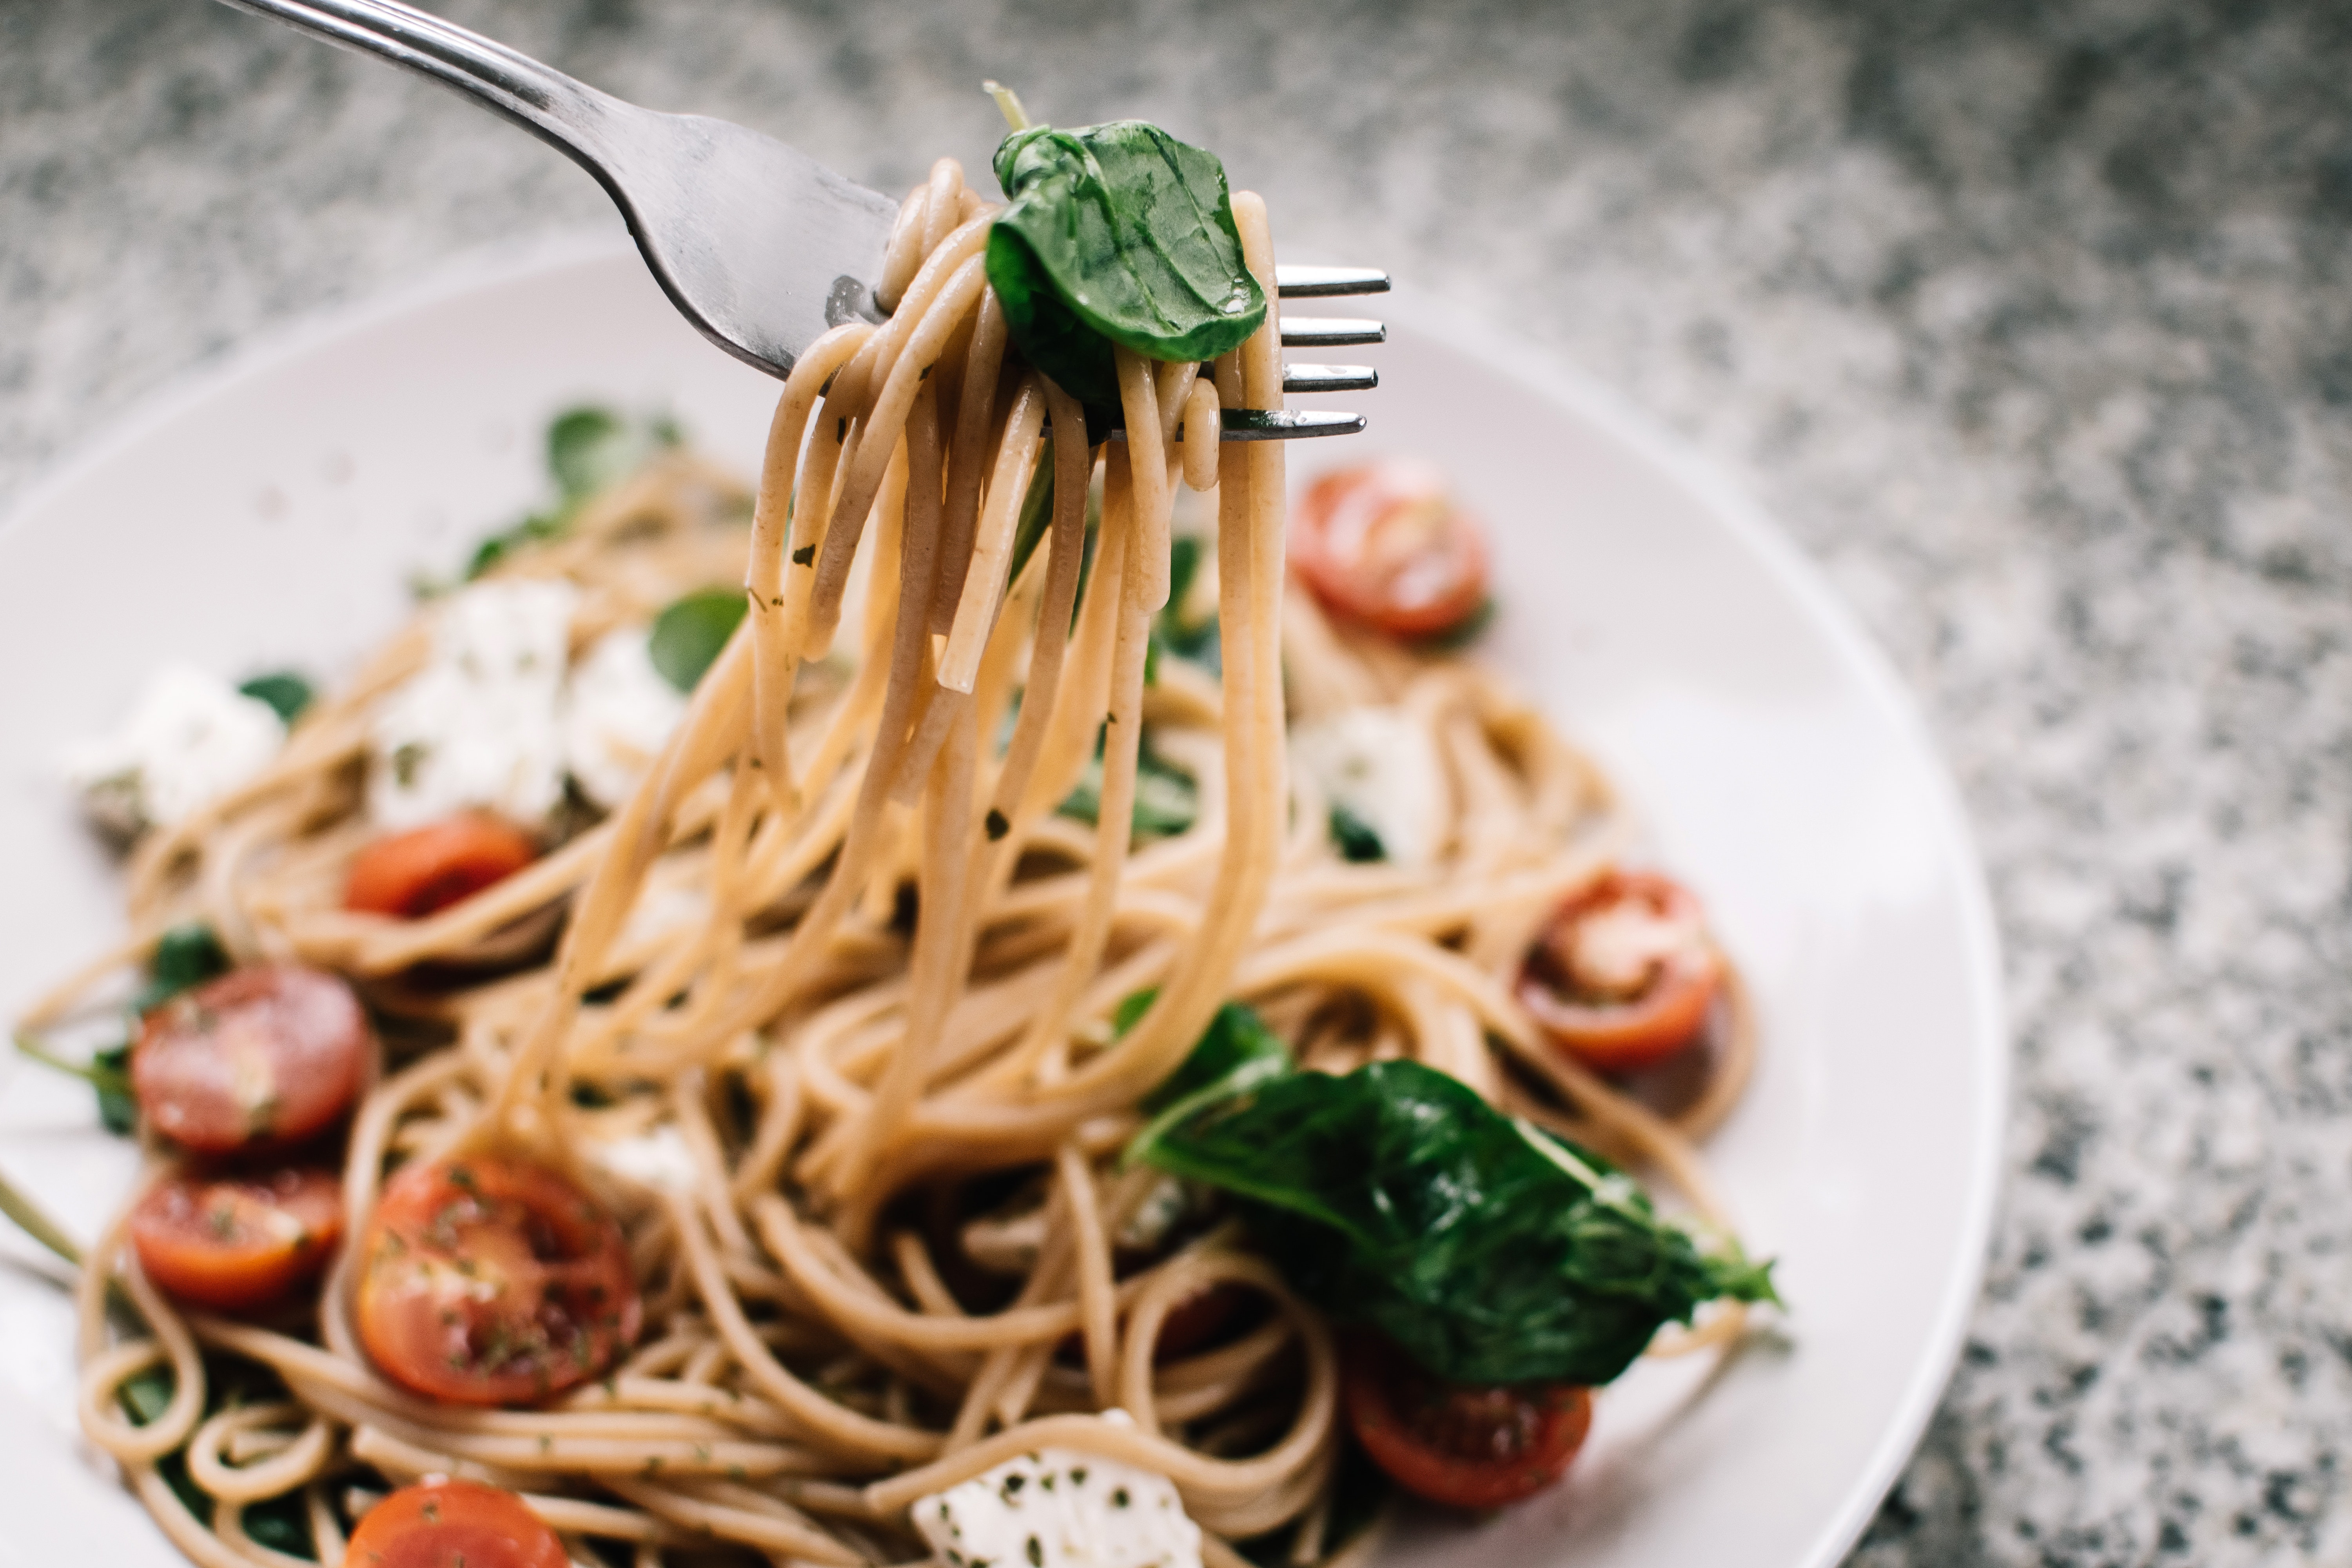 Learn more about gluten-free pasta options at Giolitti Deli!